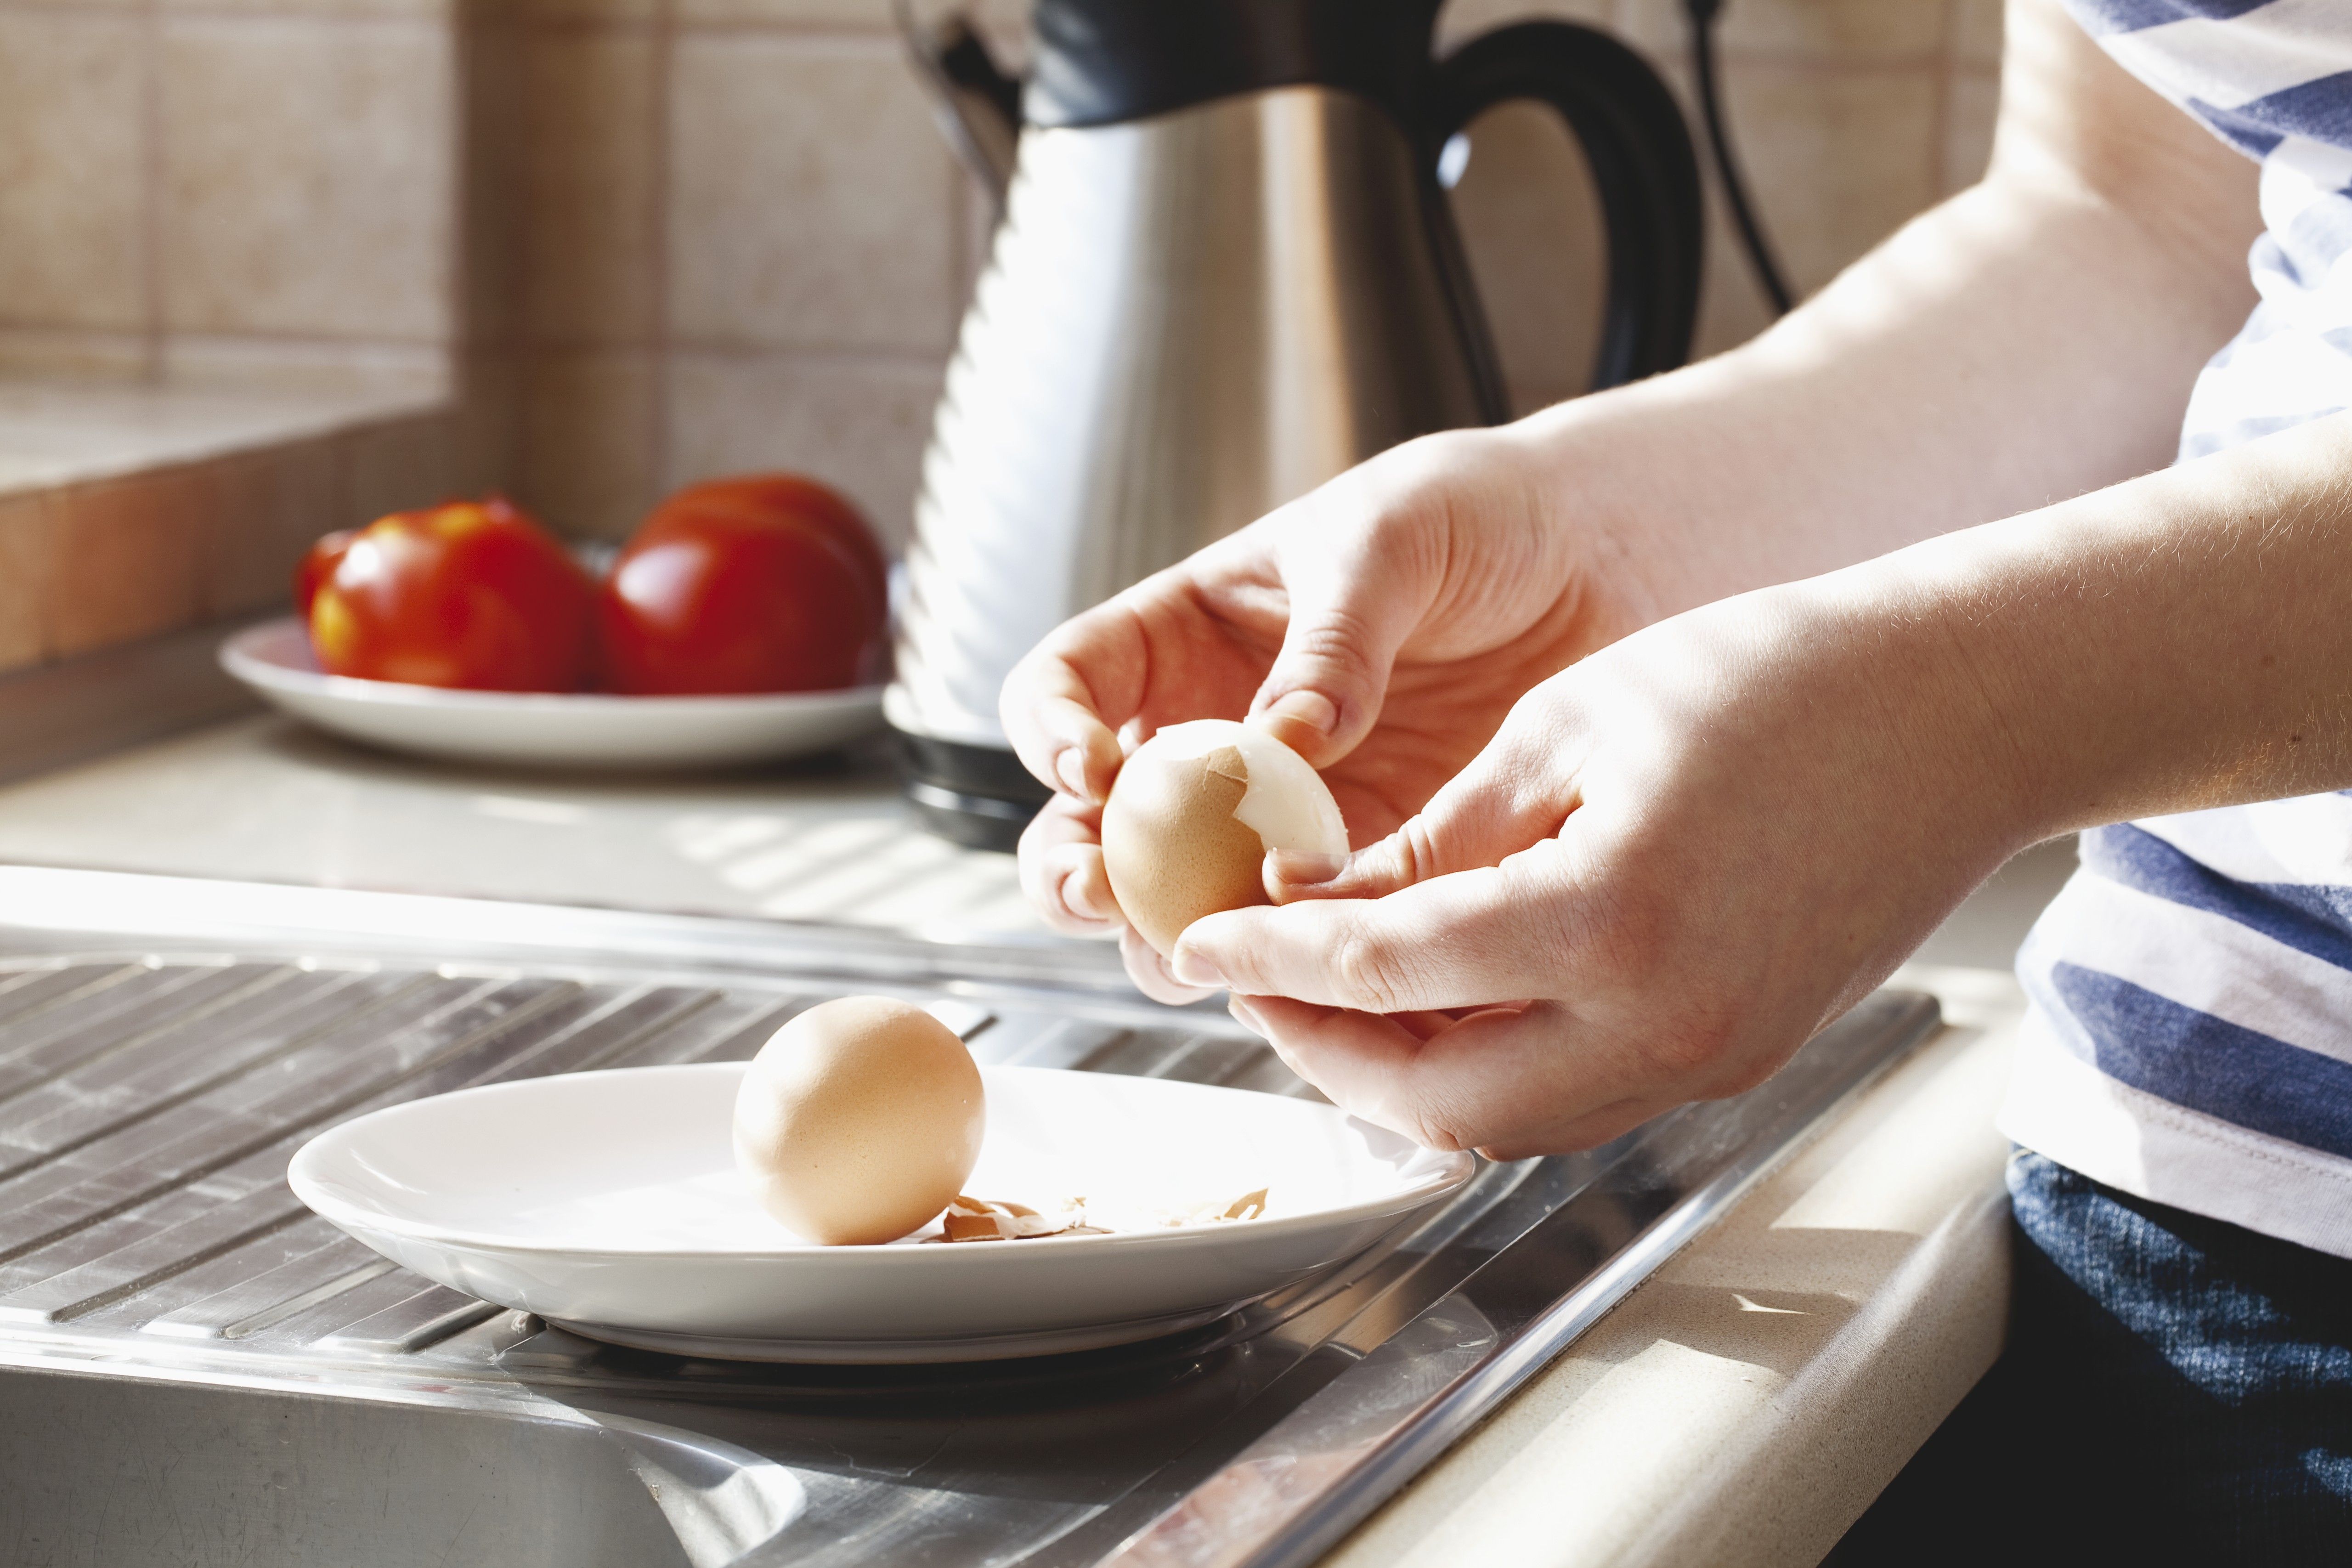 How to Peel Hard-Boiled Eggs - Best Ways to Peel Hard-Boiled Eggs